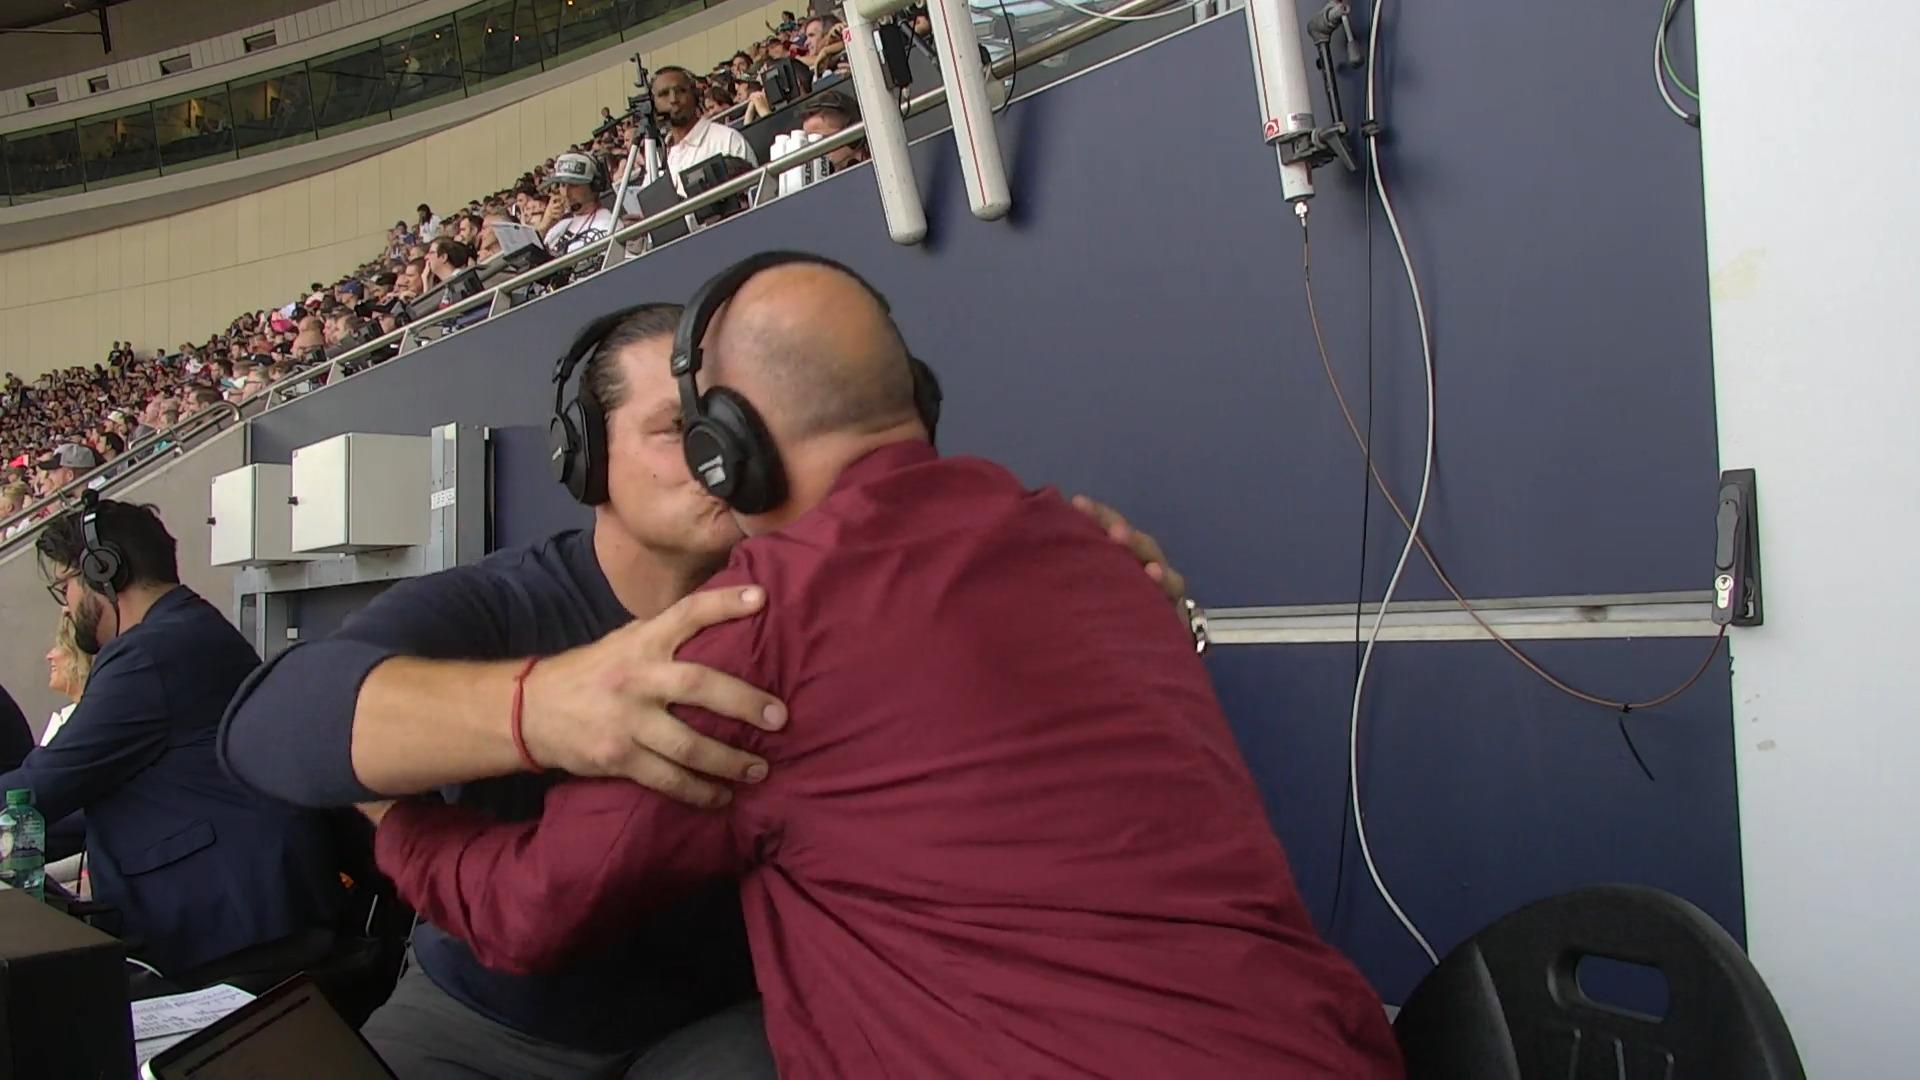 Markus Kuhn en Frank Buschmann kussen zichzelf op TV Great Love at the NFL!